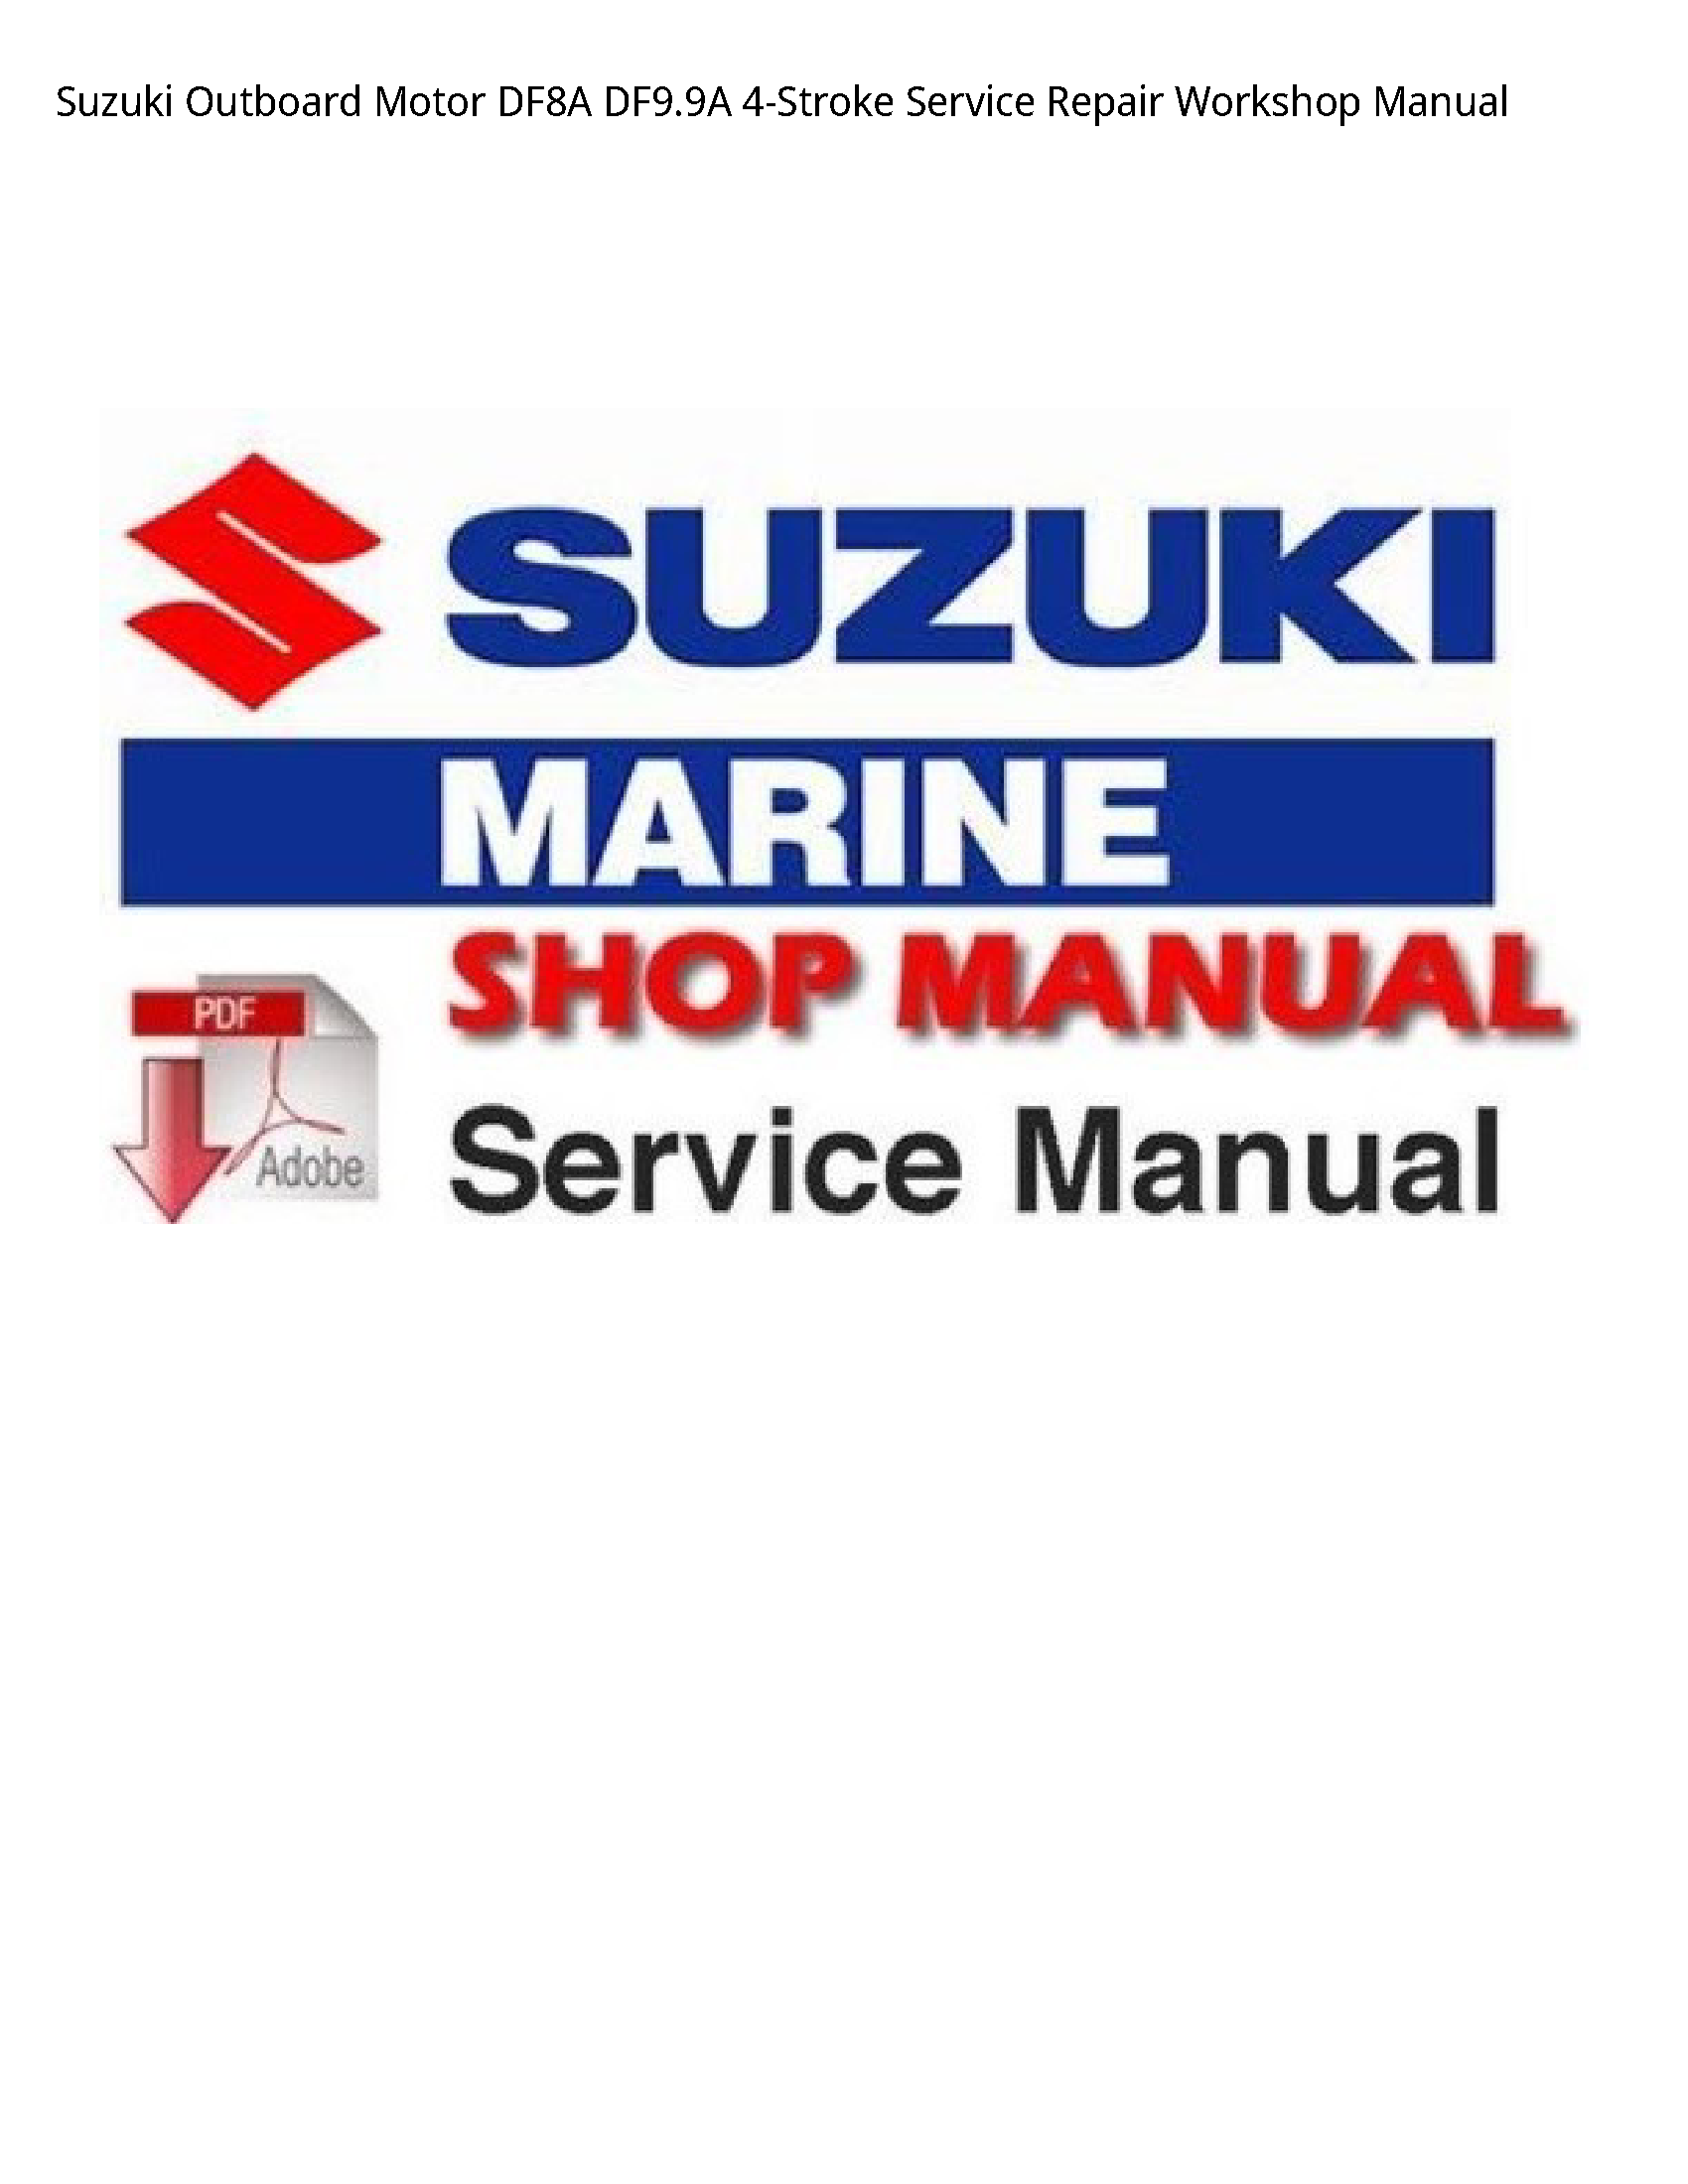 Suzuki DF8A Outboard Motor manual